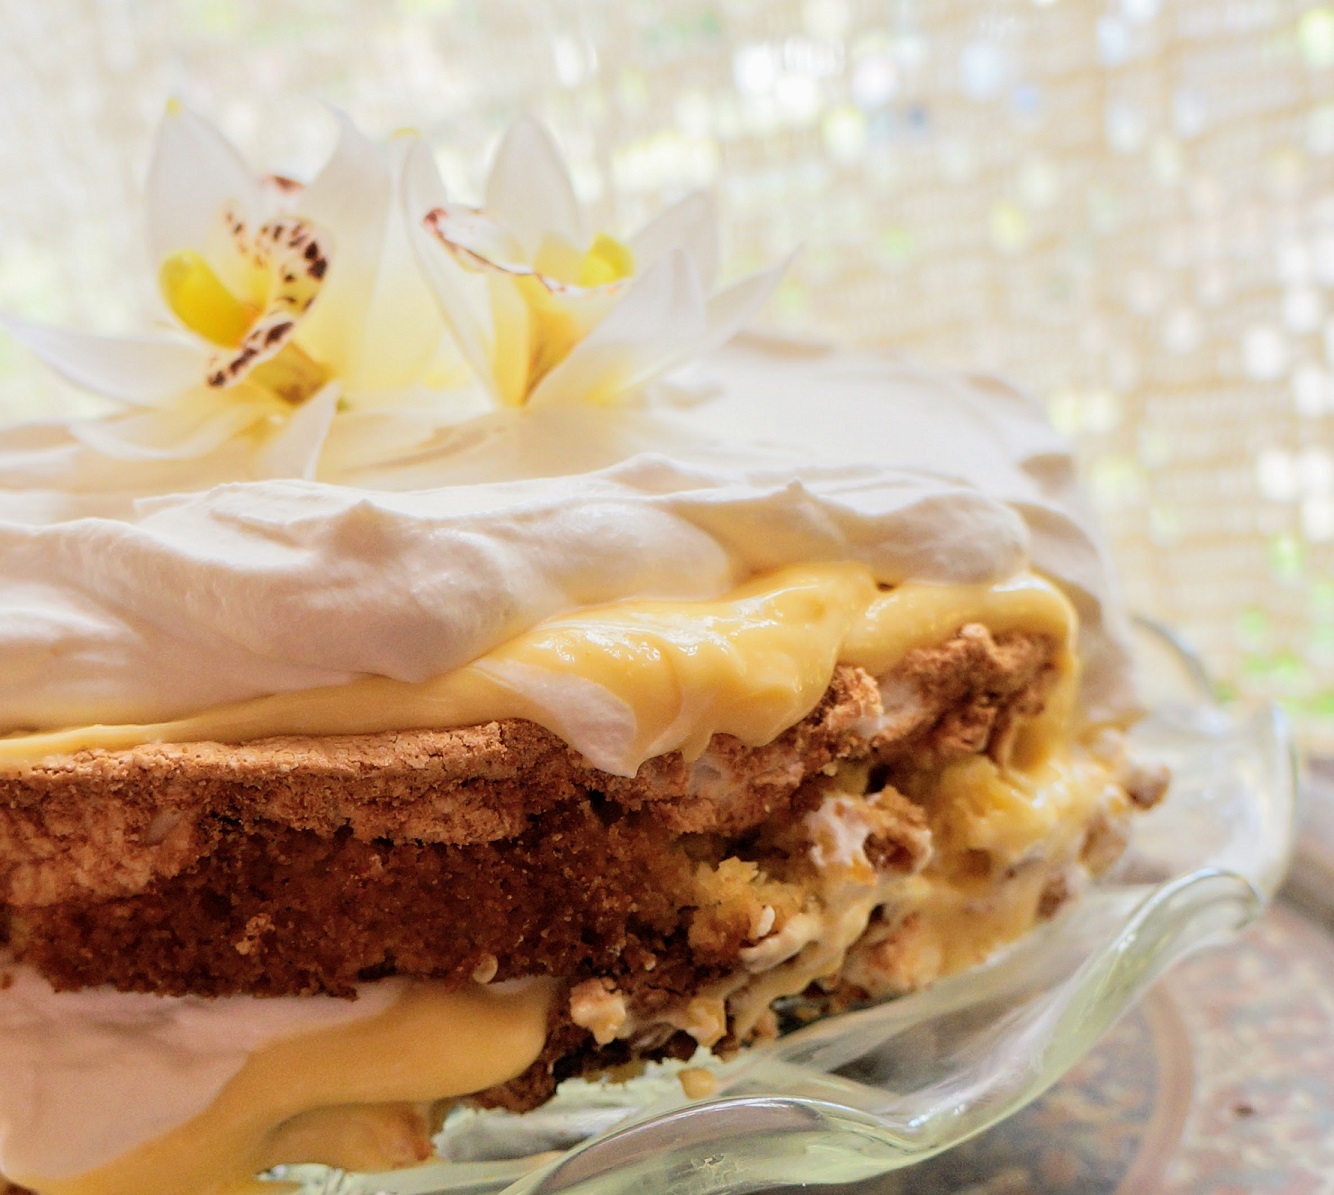 lemon meringue cake